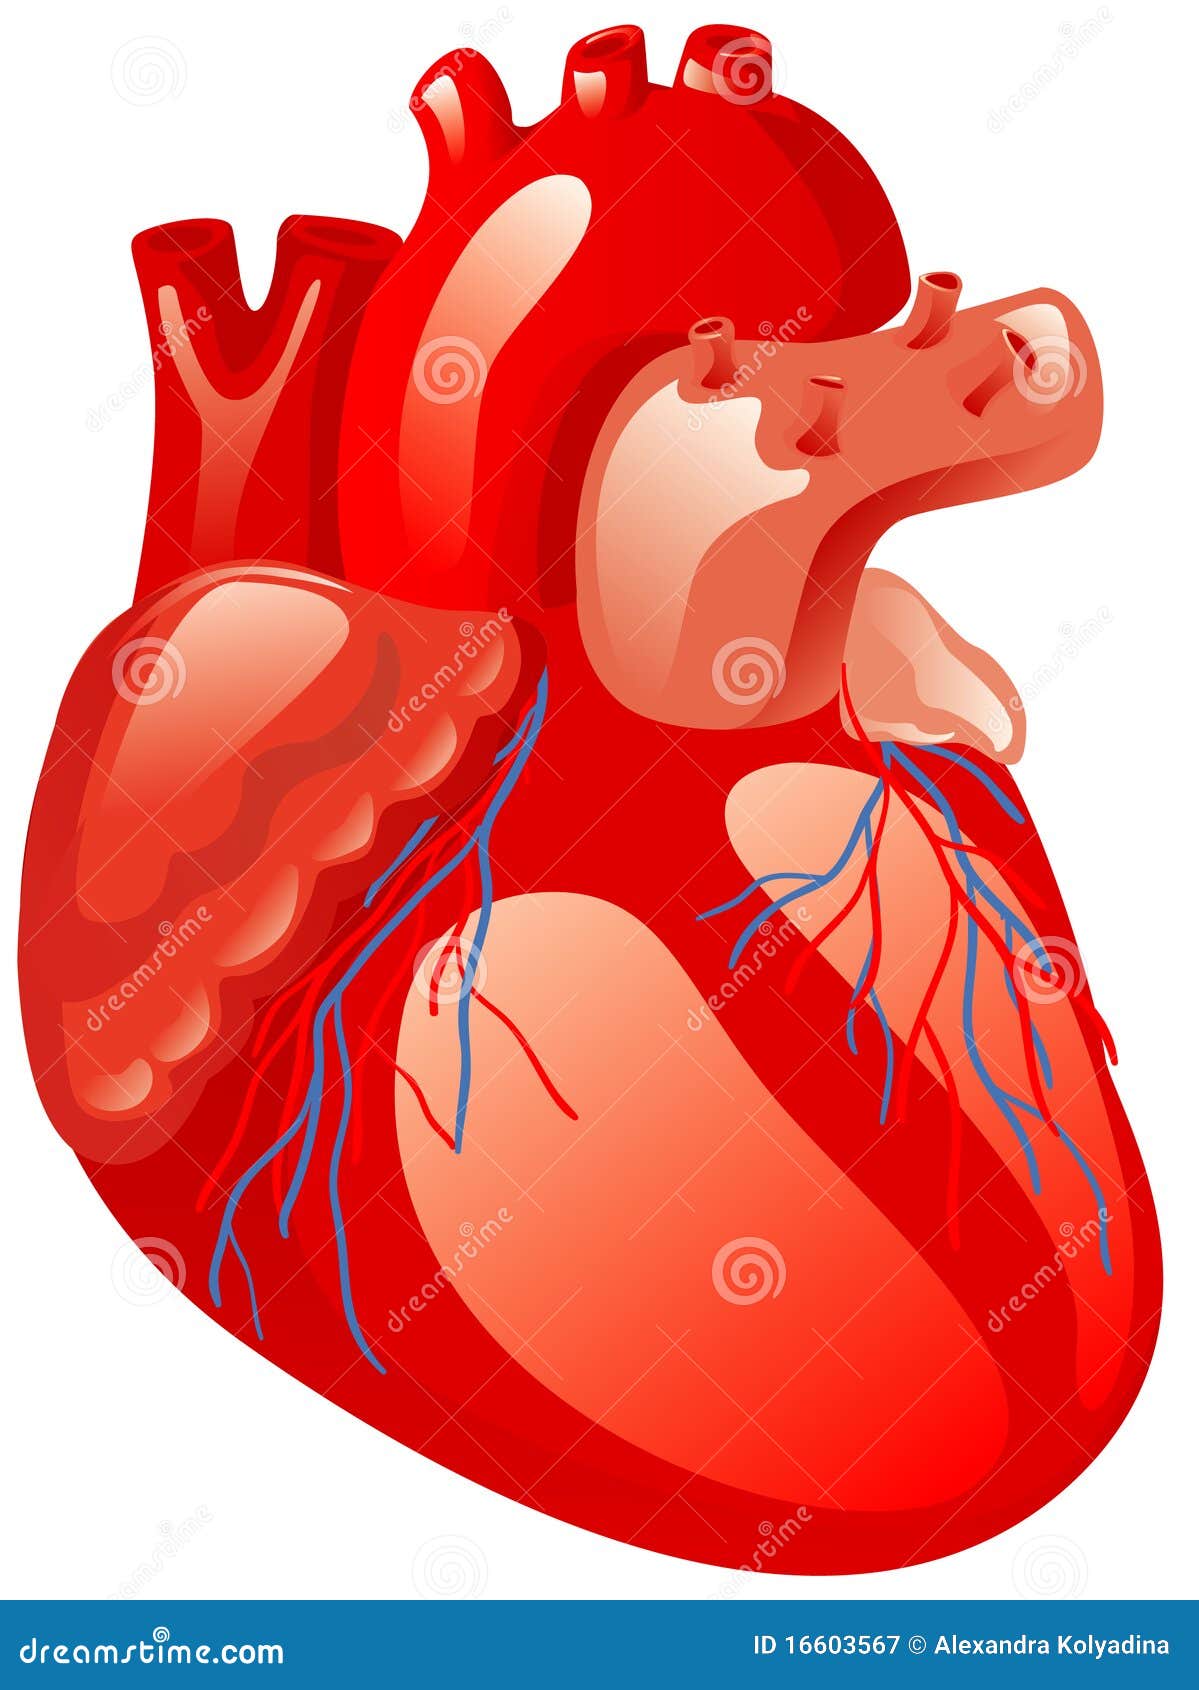 human heart clipart - photo #14